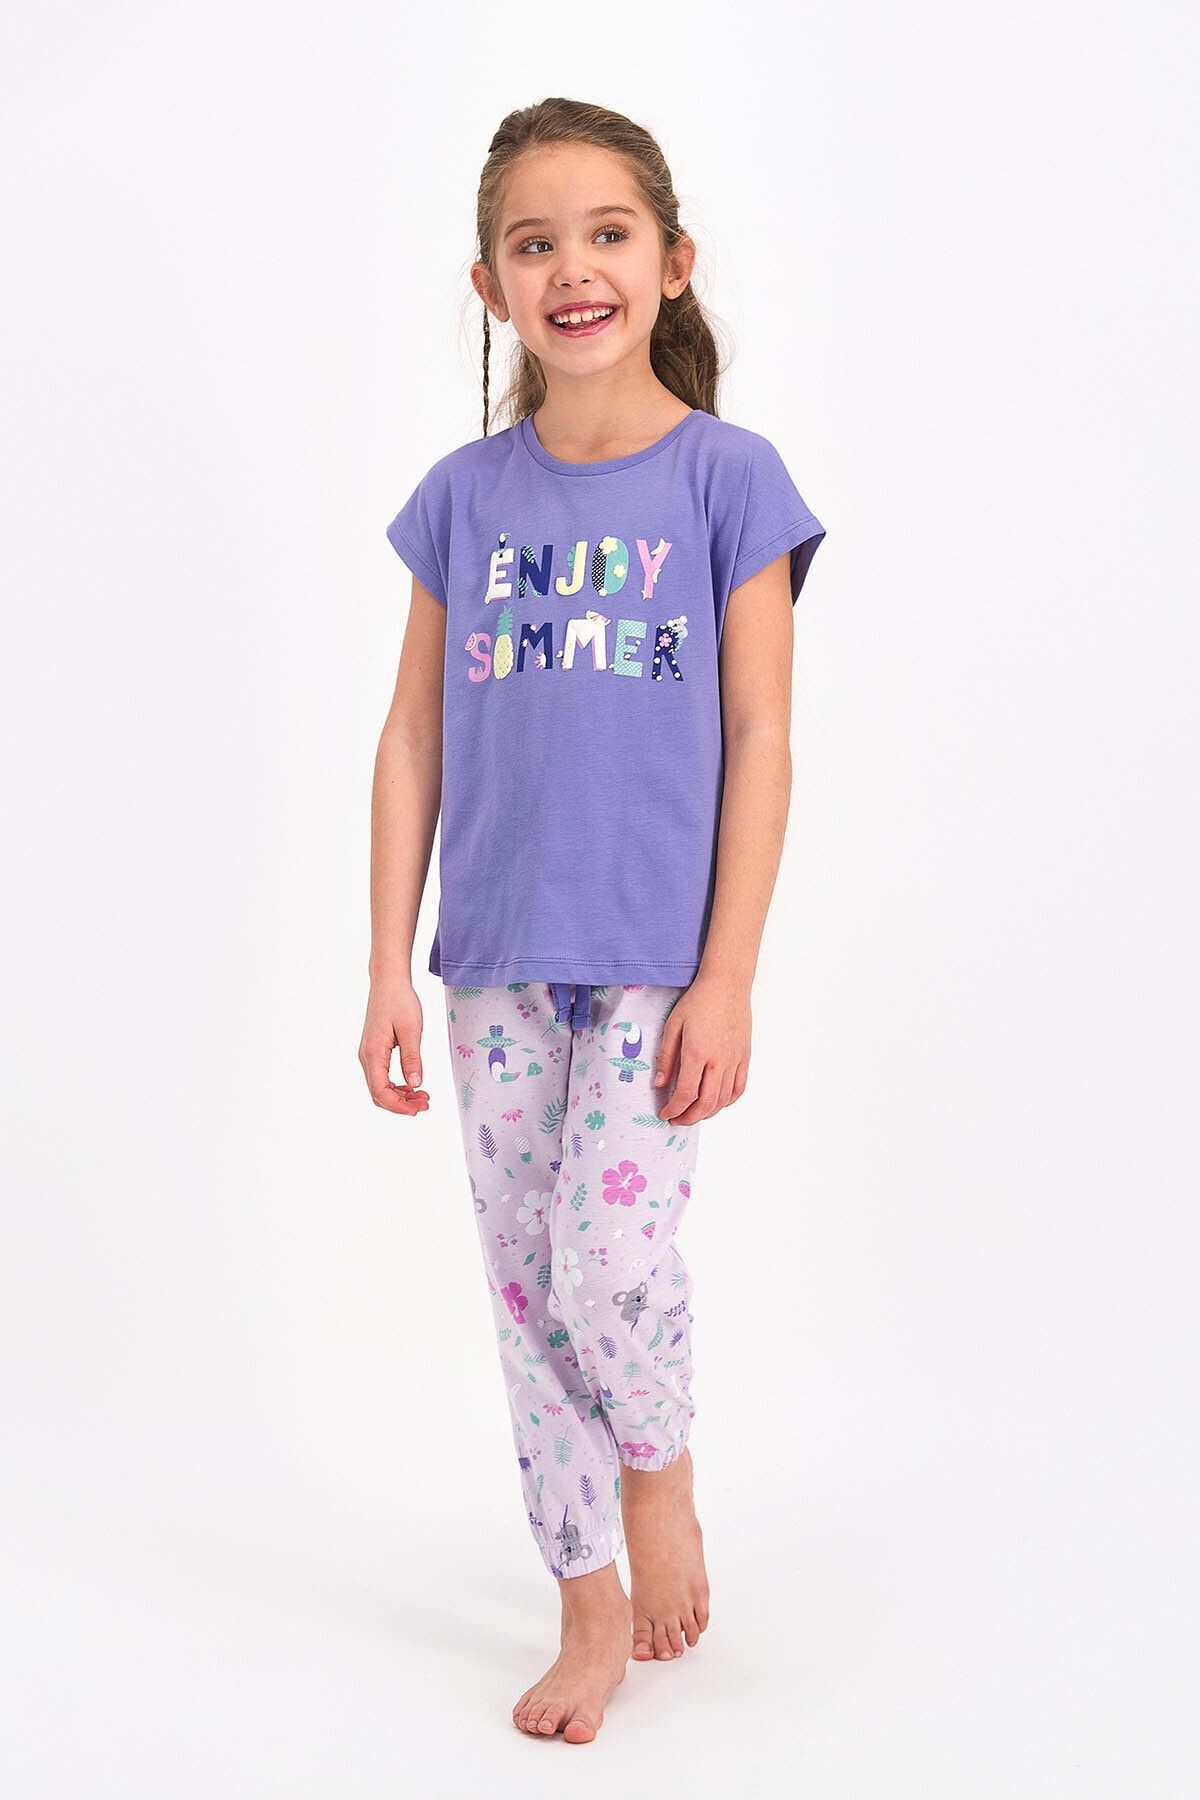 Rolypoly Rolypoly Enjoy Summer Mor Kız Çocuk Kısa Kol Pijama Takımı